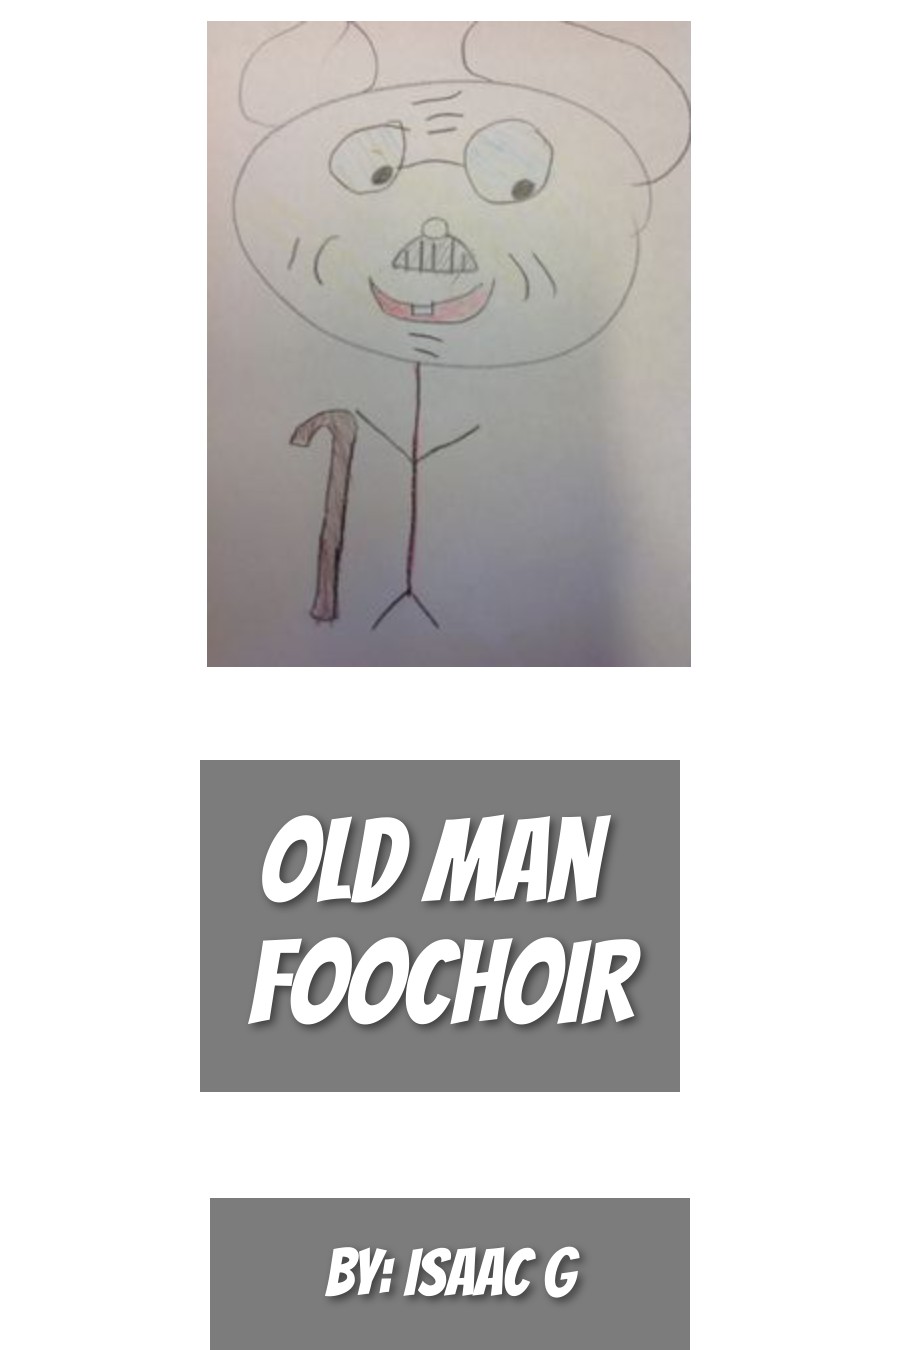 Old Man Foochoir by Isaac G